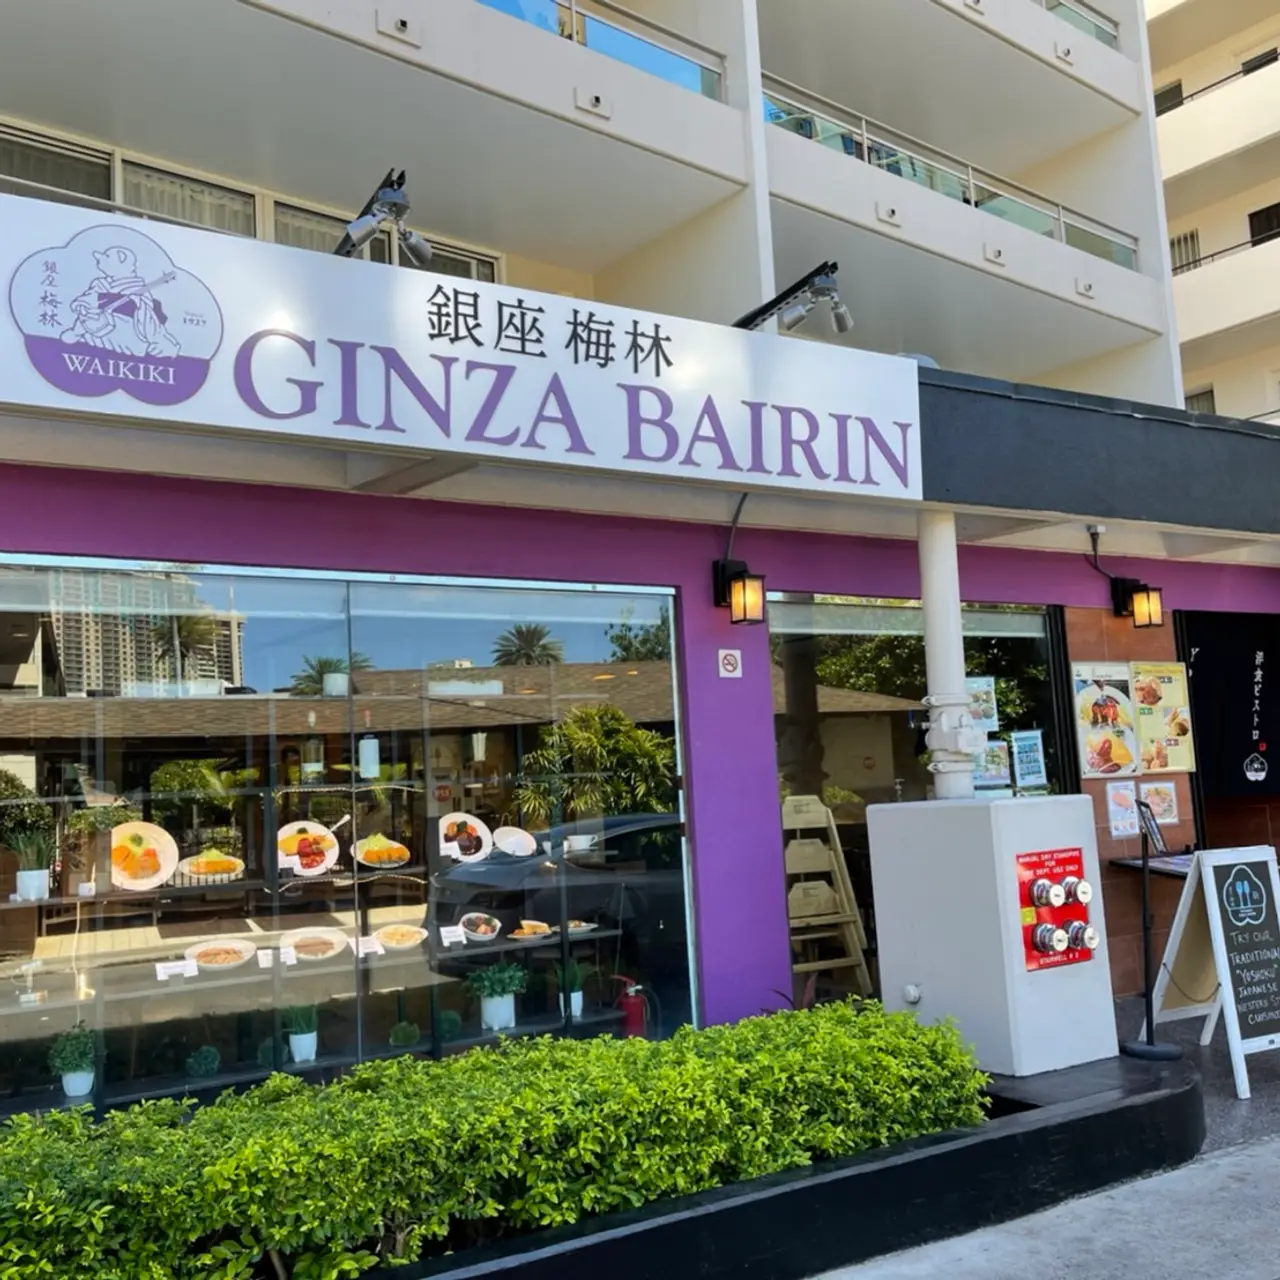 Ginza Bairin Hawaii Tonkatsu and Yoshoku Bistro is a Restaurant located in the city of Waikiki on Oahu, Hawaii